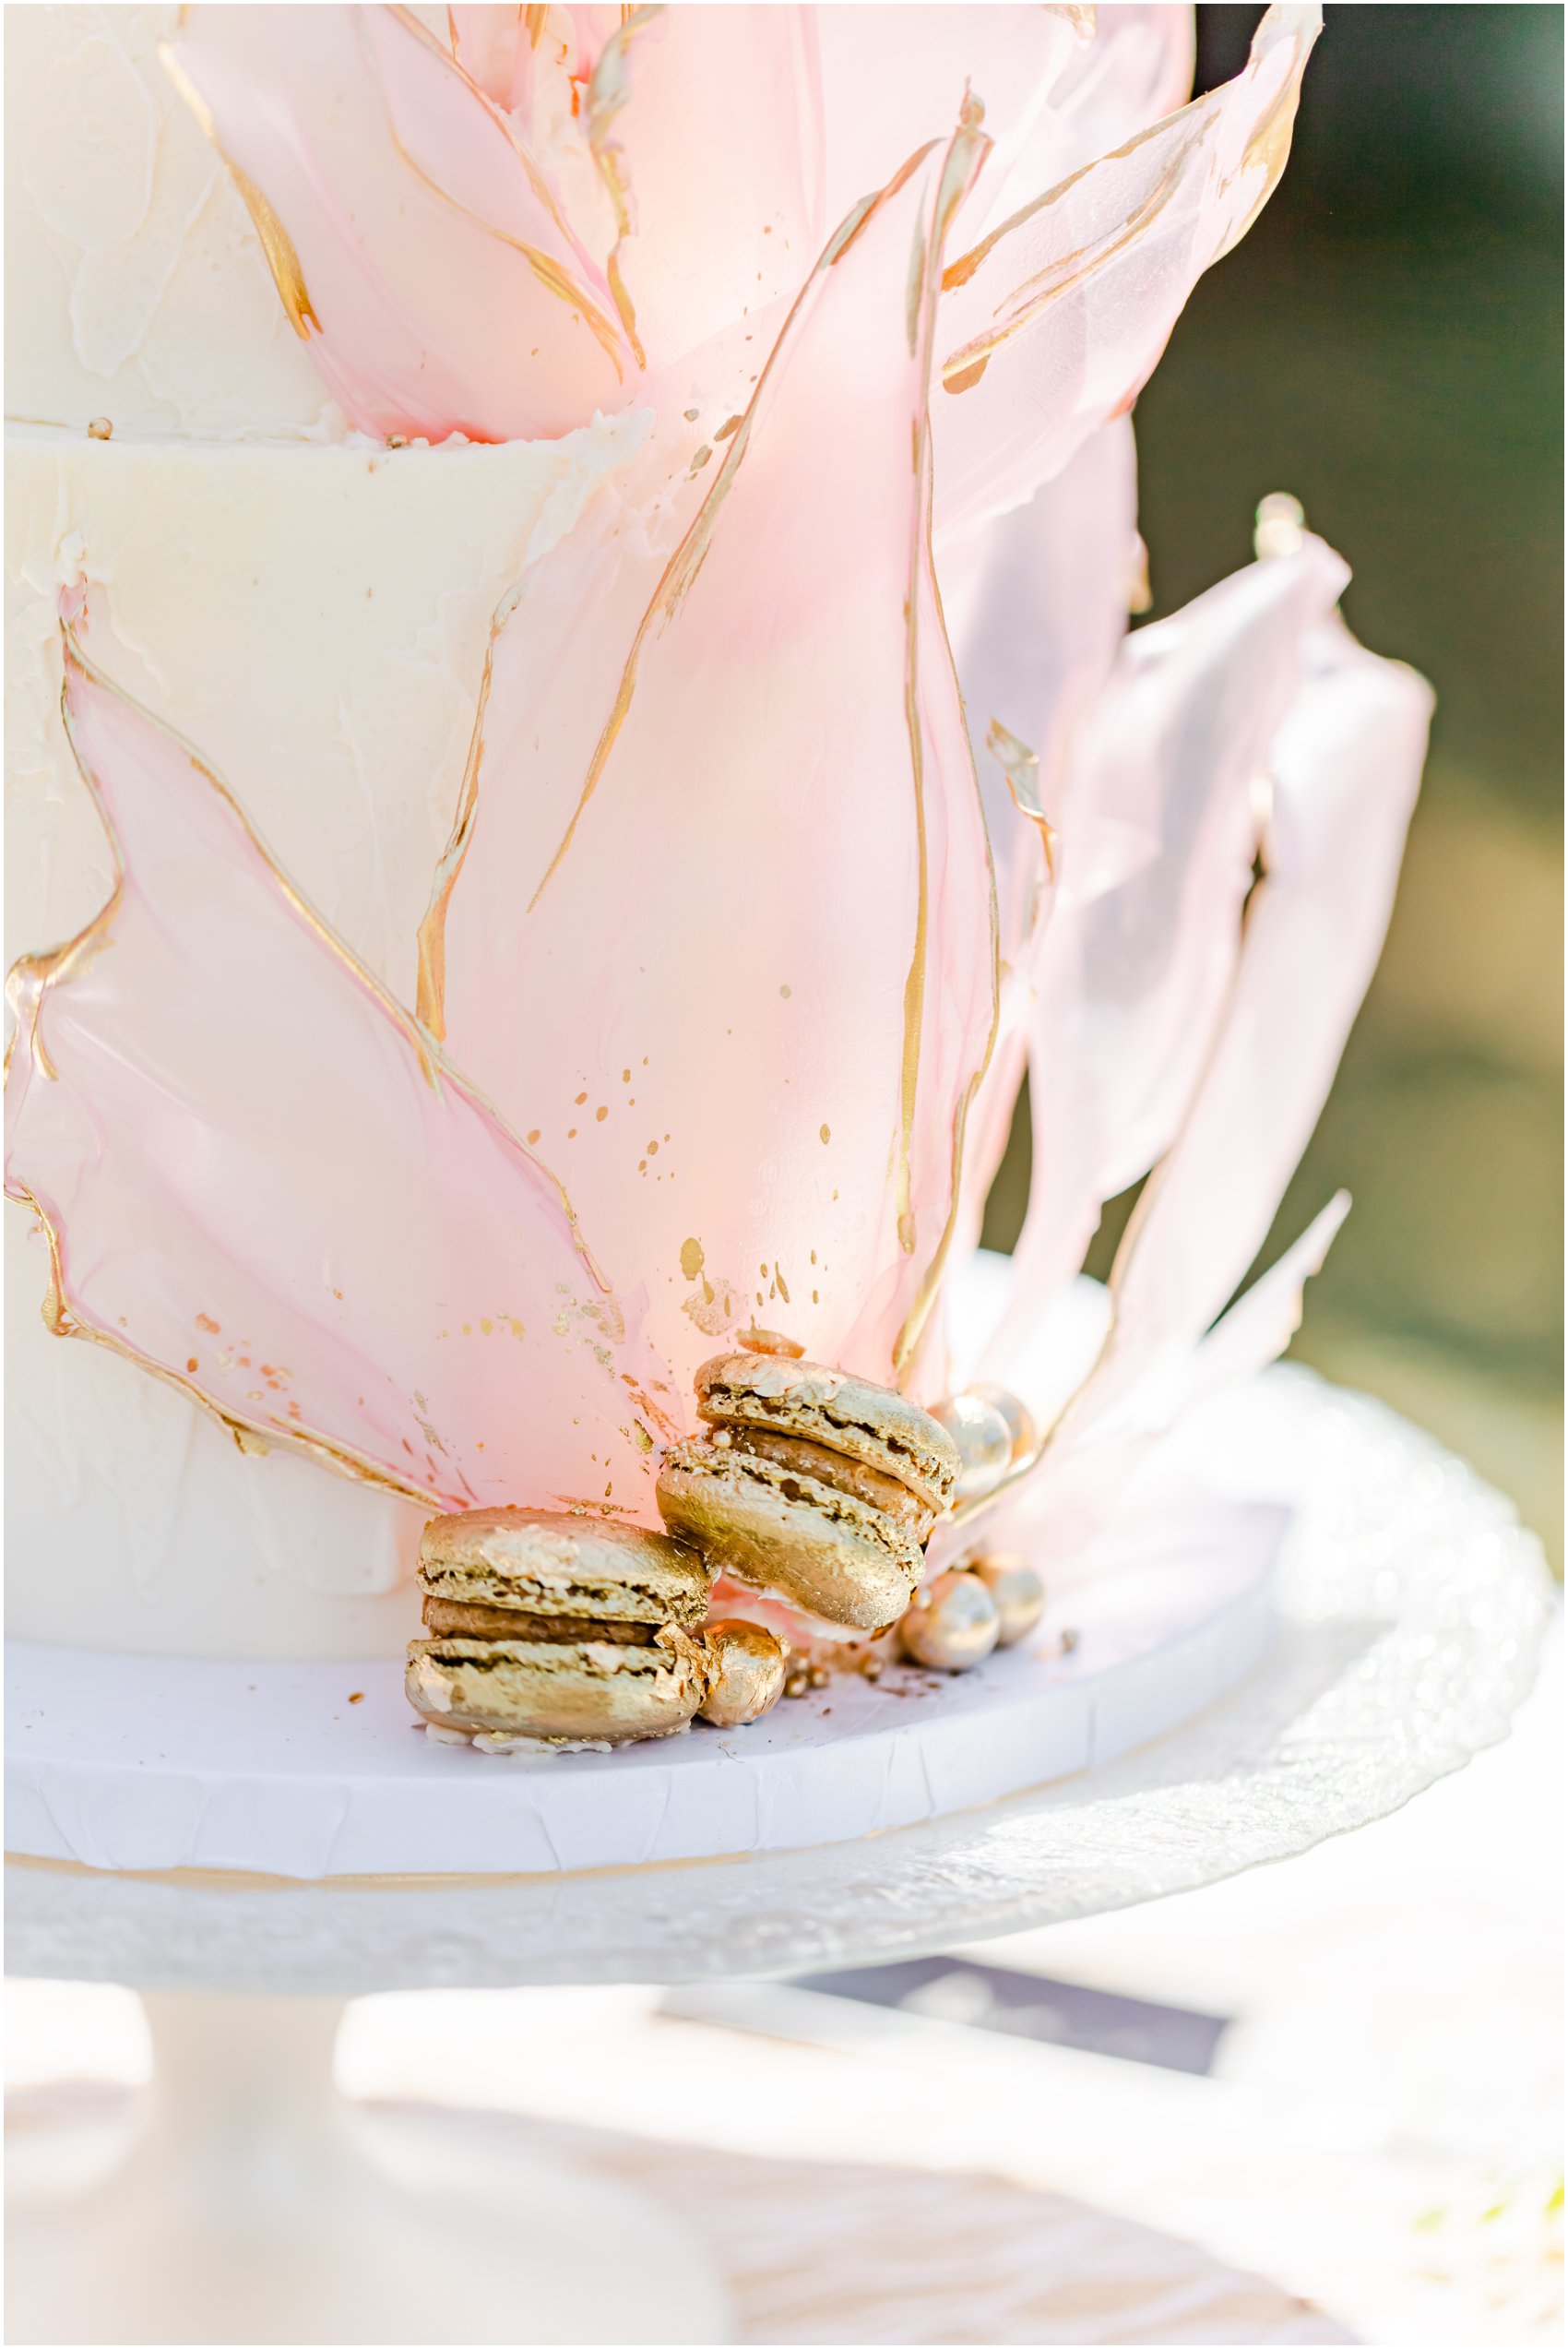 Vancouver Wedding Cake by Summer Sunday Cakes